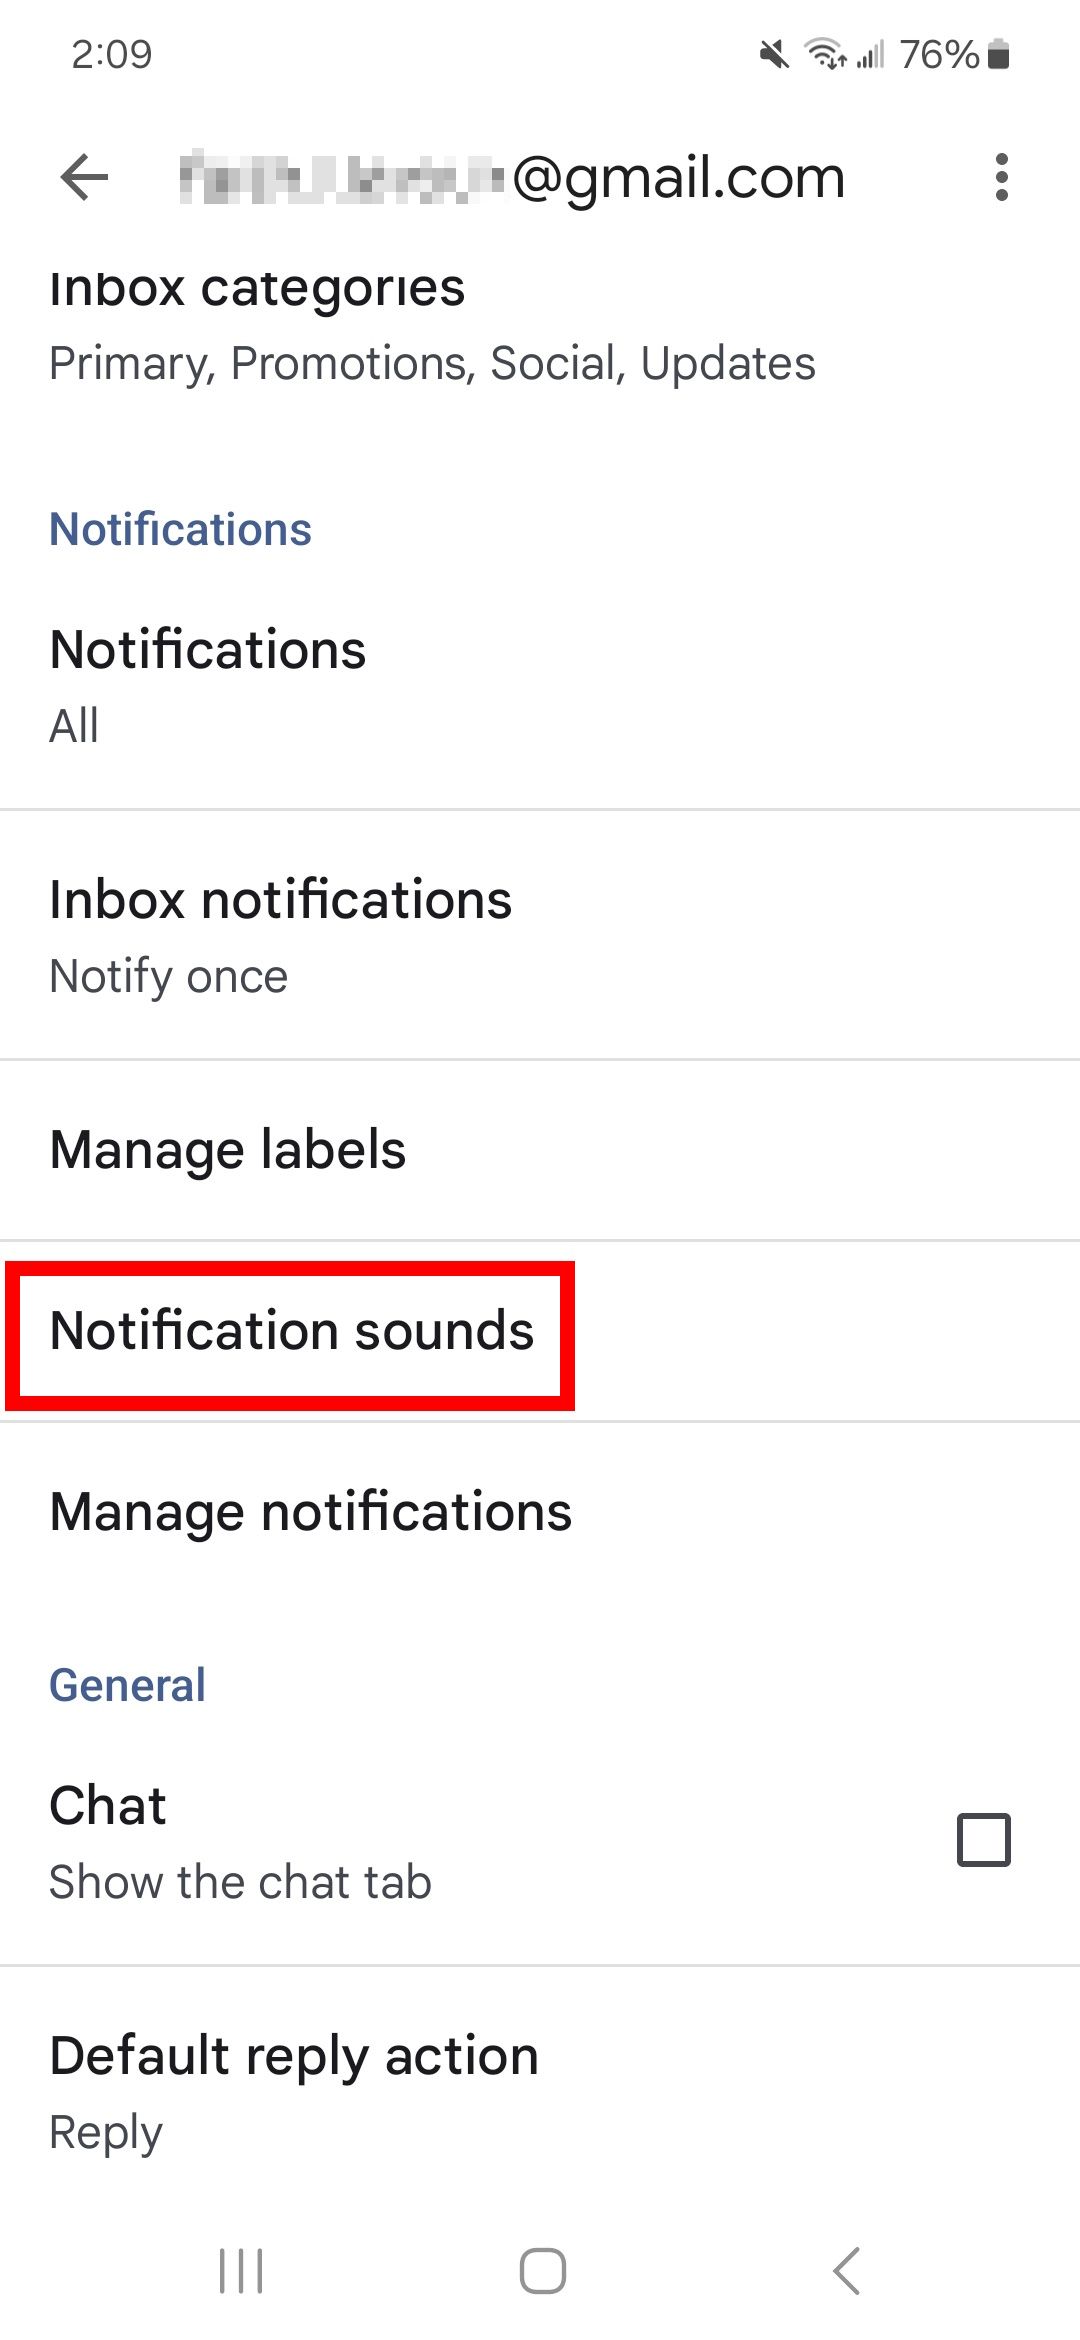 Garis segi empat berwarna merah di atas bunyi notifikasi pada pengaturan email pada aplikasi gmail